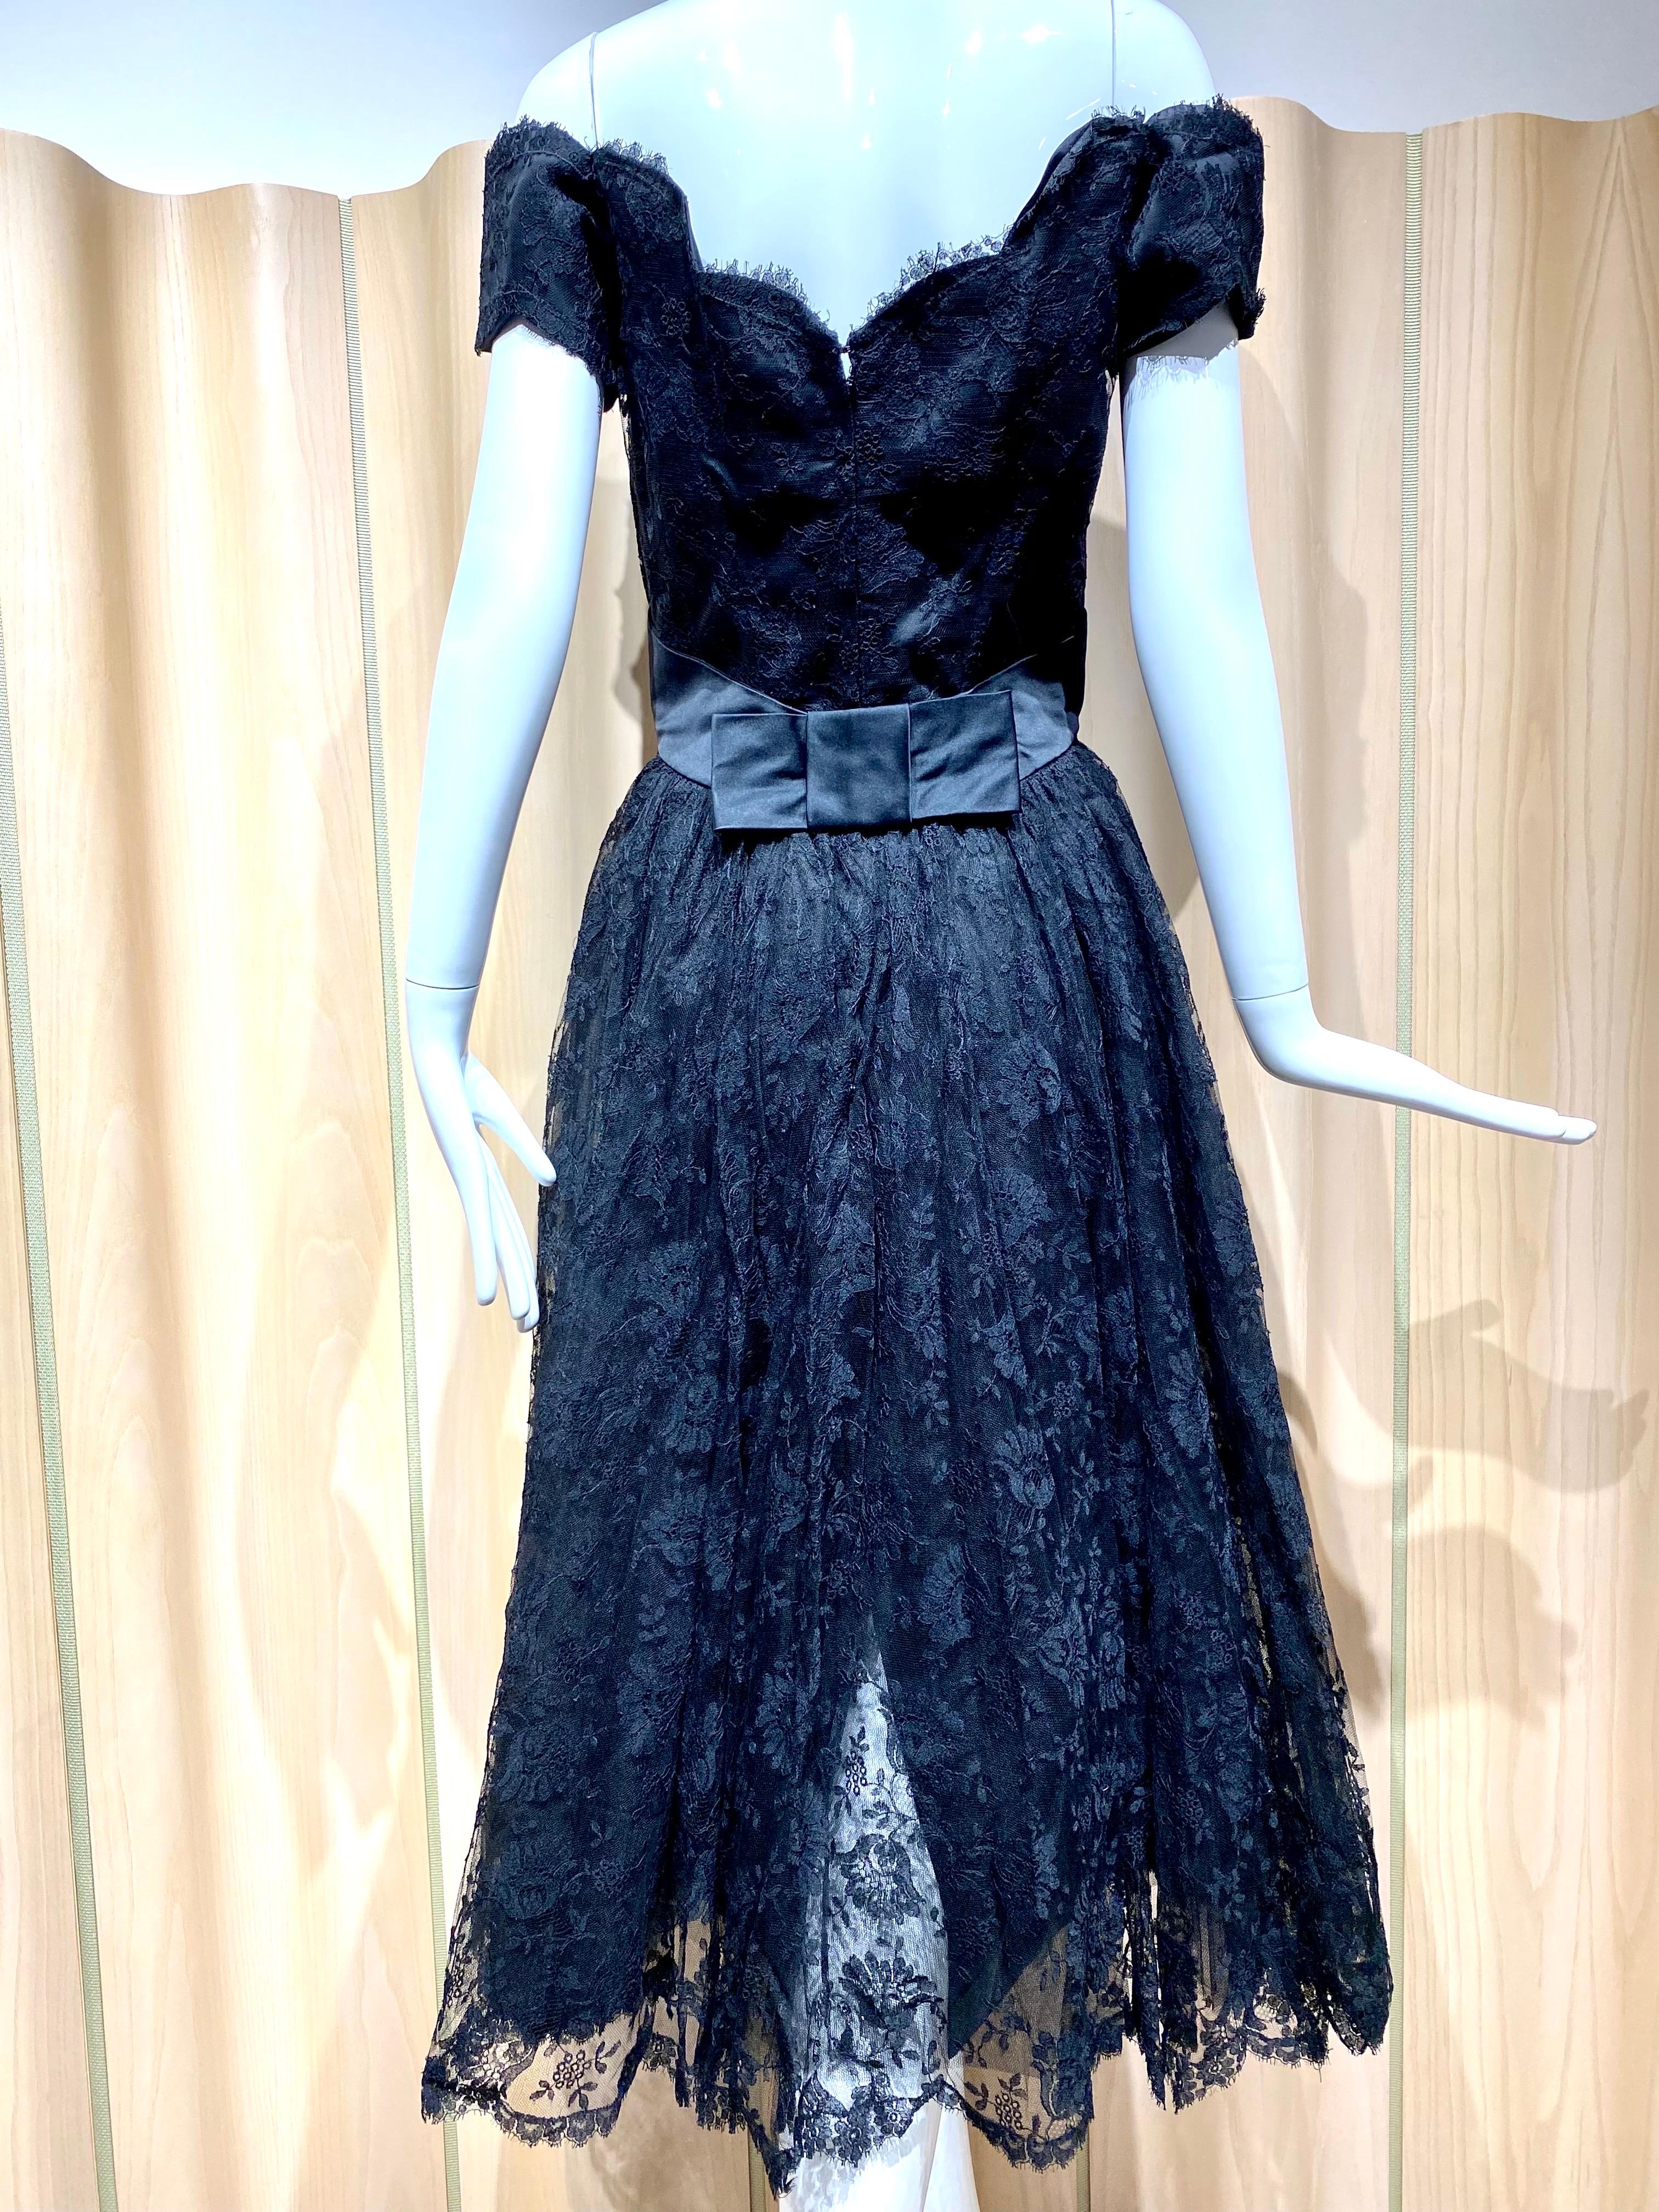 Timeless 1950s Estevez Black lace off shoulder cocktail dress.
Bust: 34”/ Waist 28”
